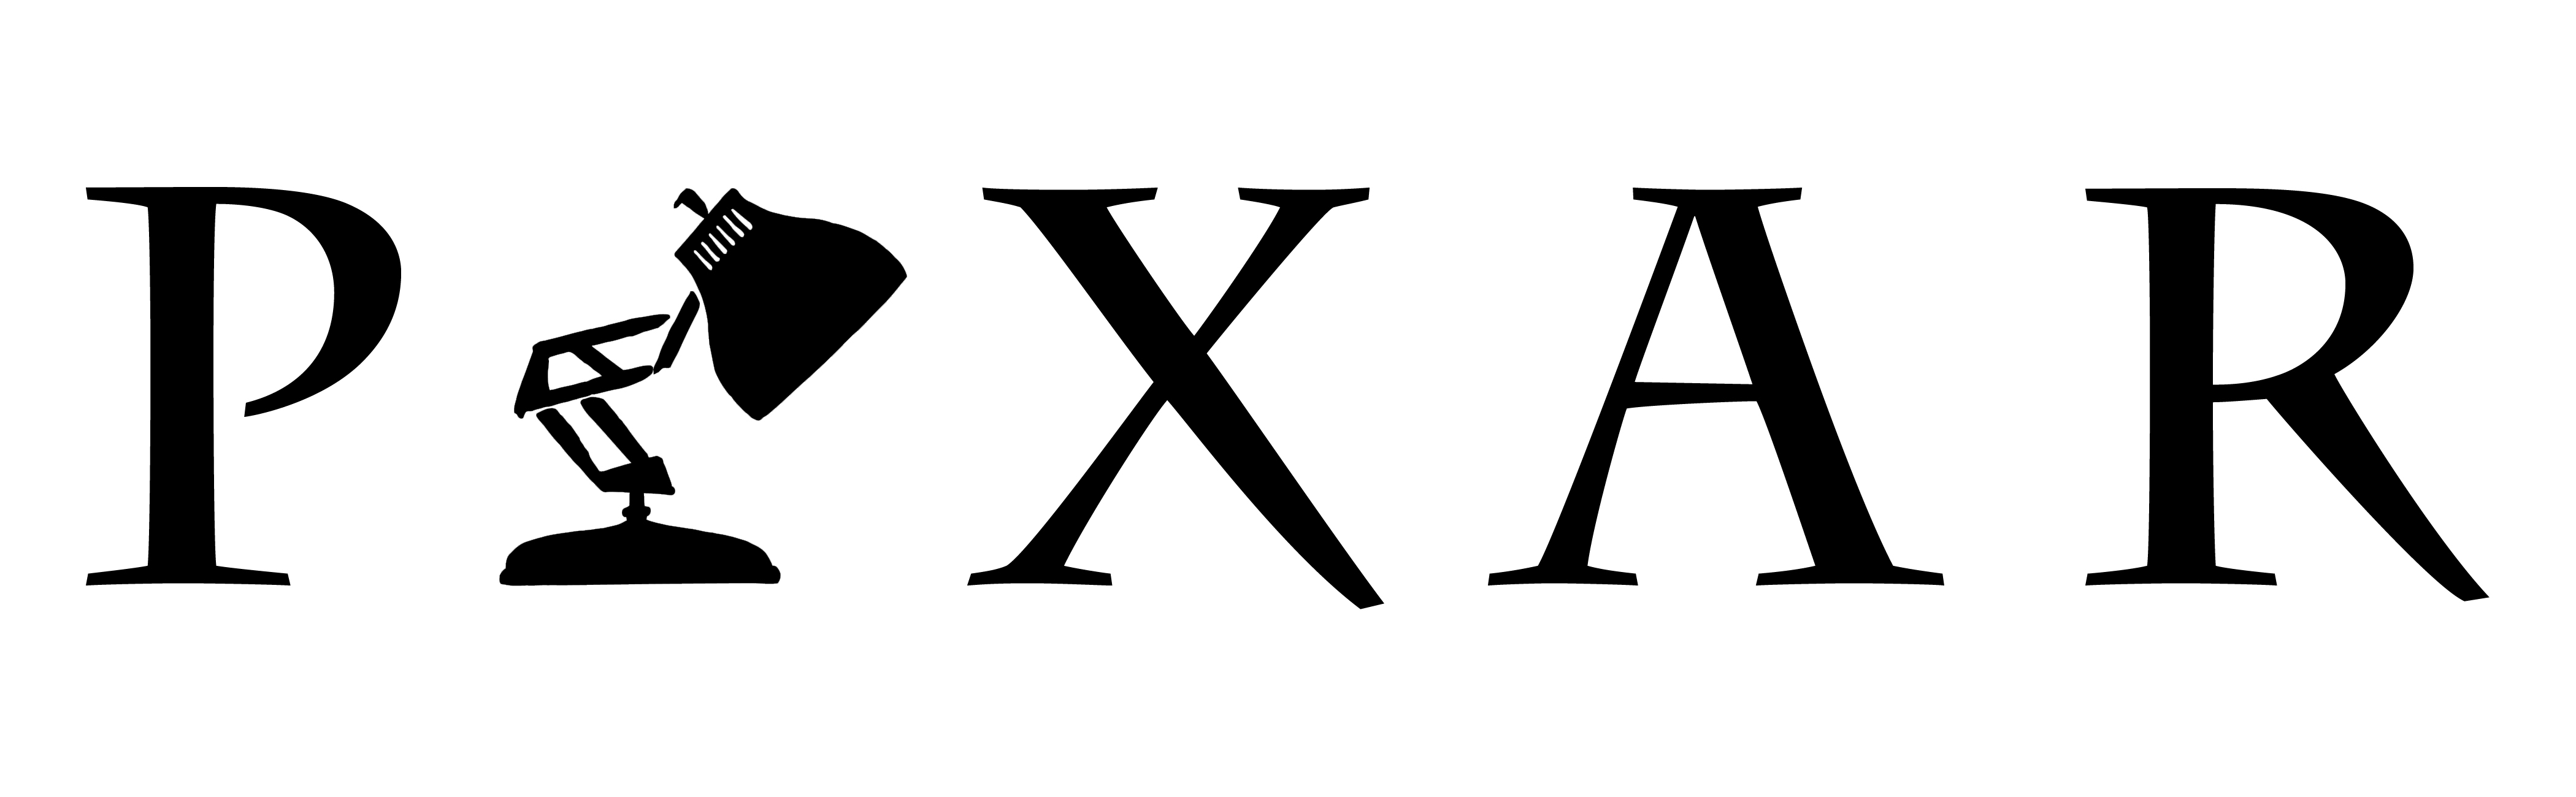 Disney Pixar Logo Png - Trans